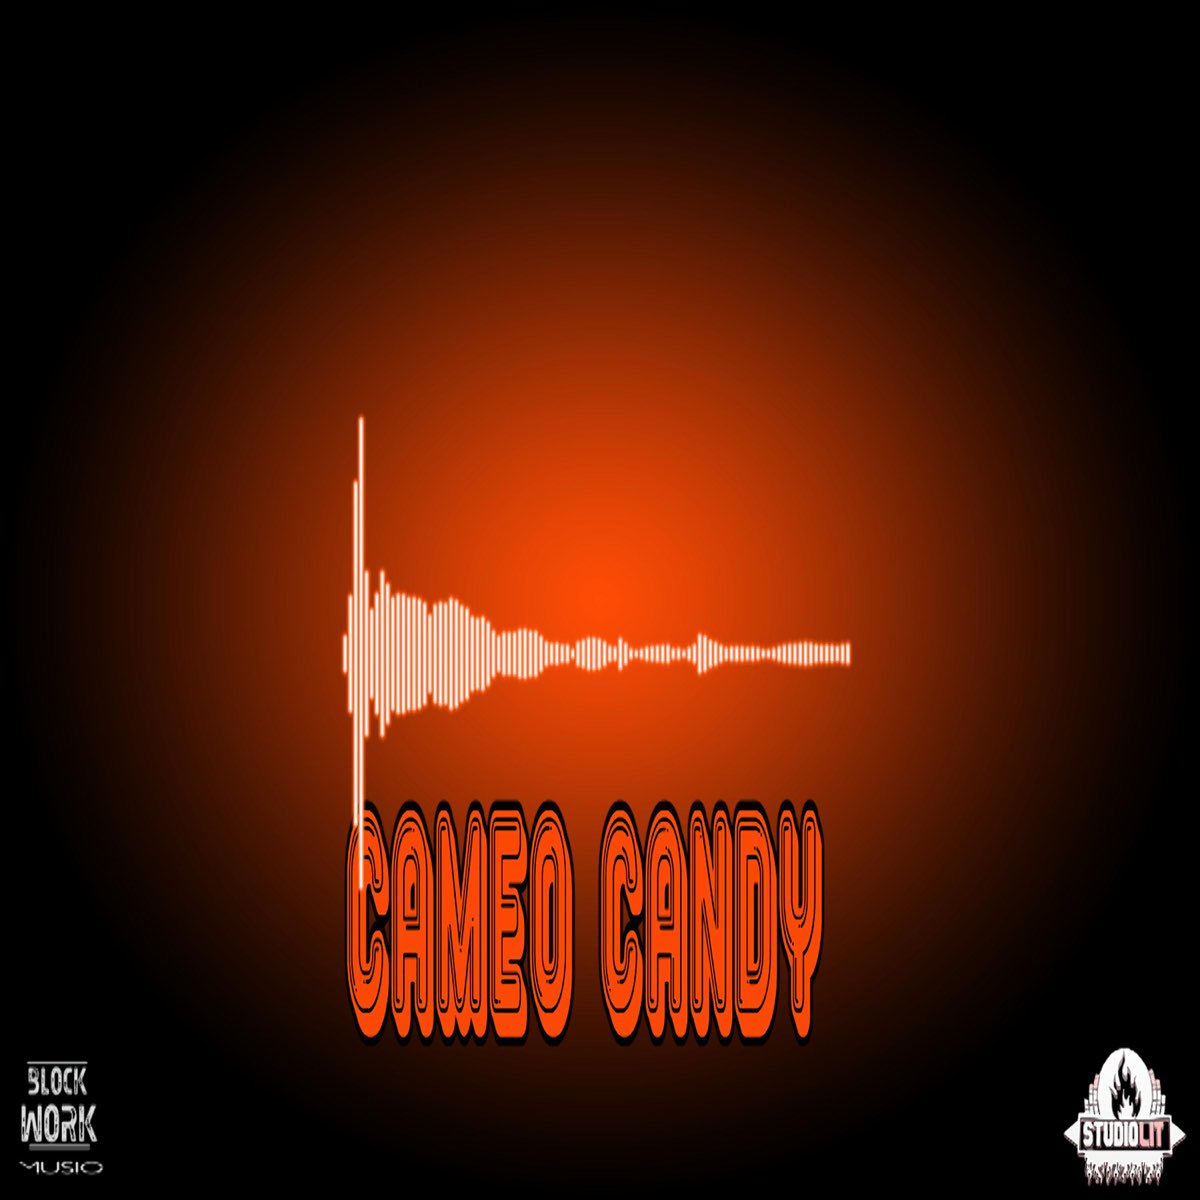 Cameo Candy (Instrumental) - Single - Album by Gboybeatz - Apple Music